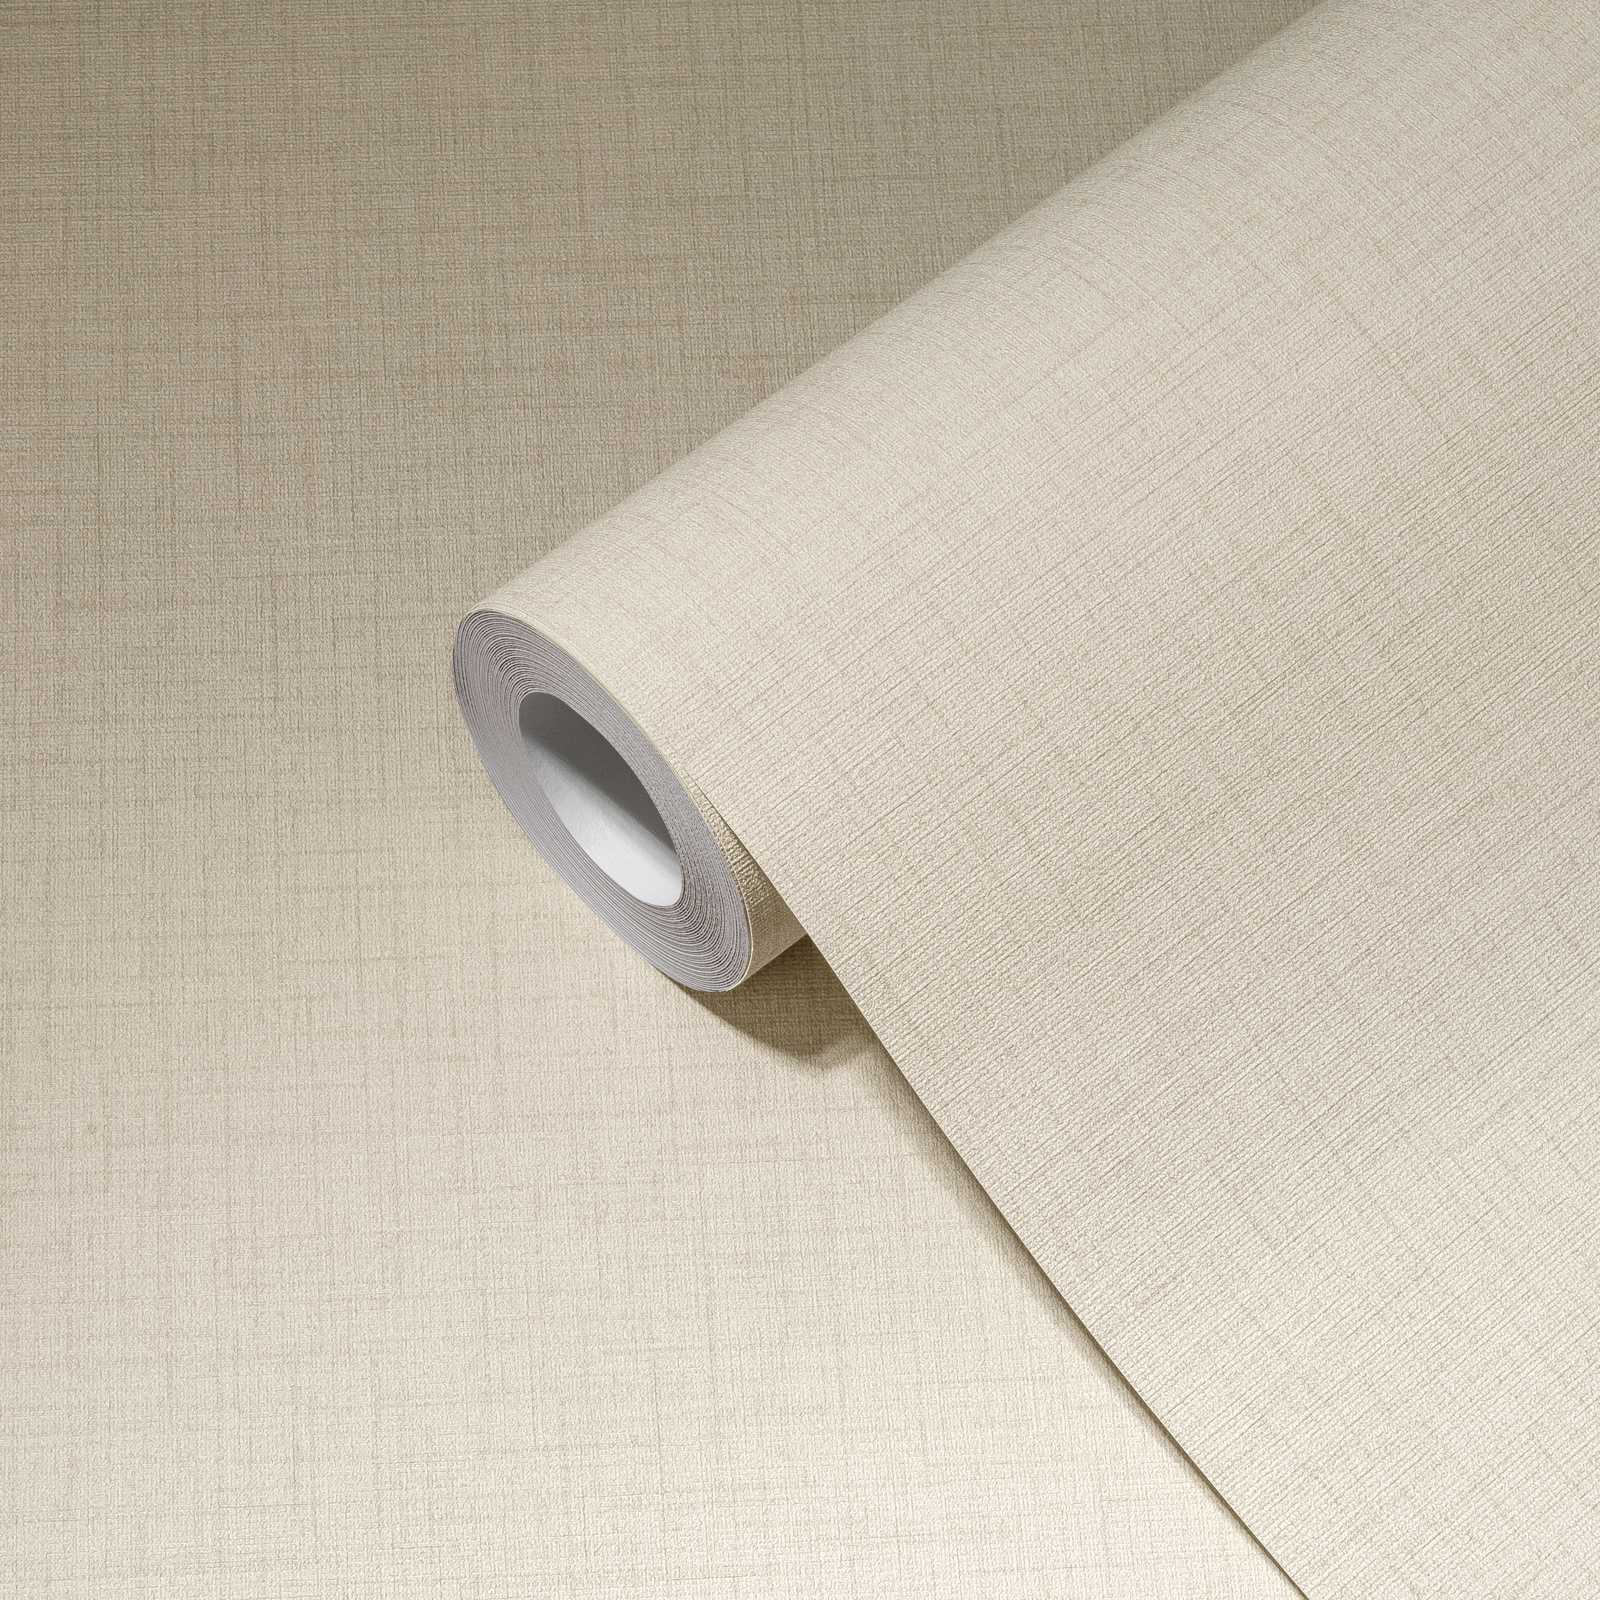             wallpaper plain beige with textile texture - grey
        